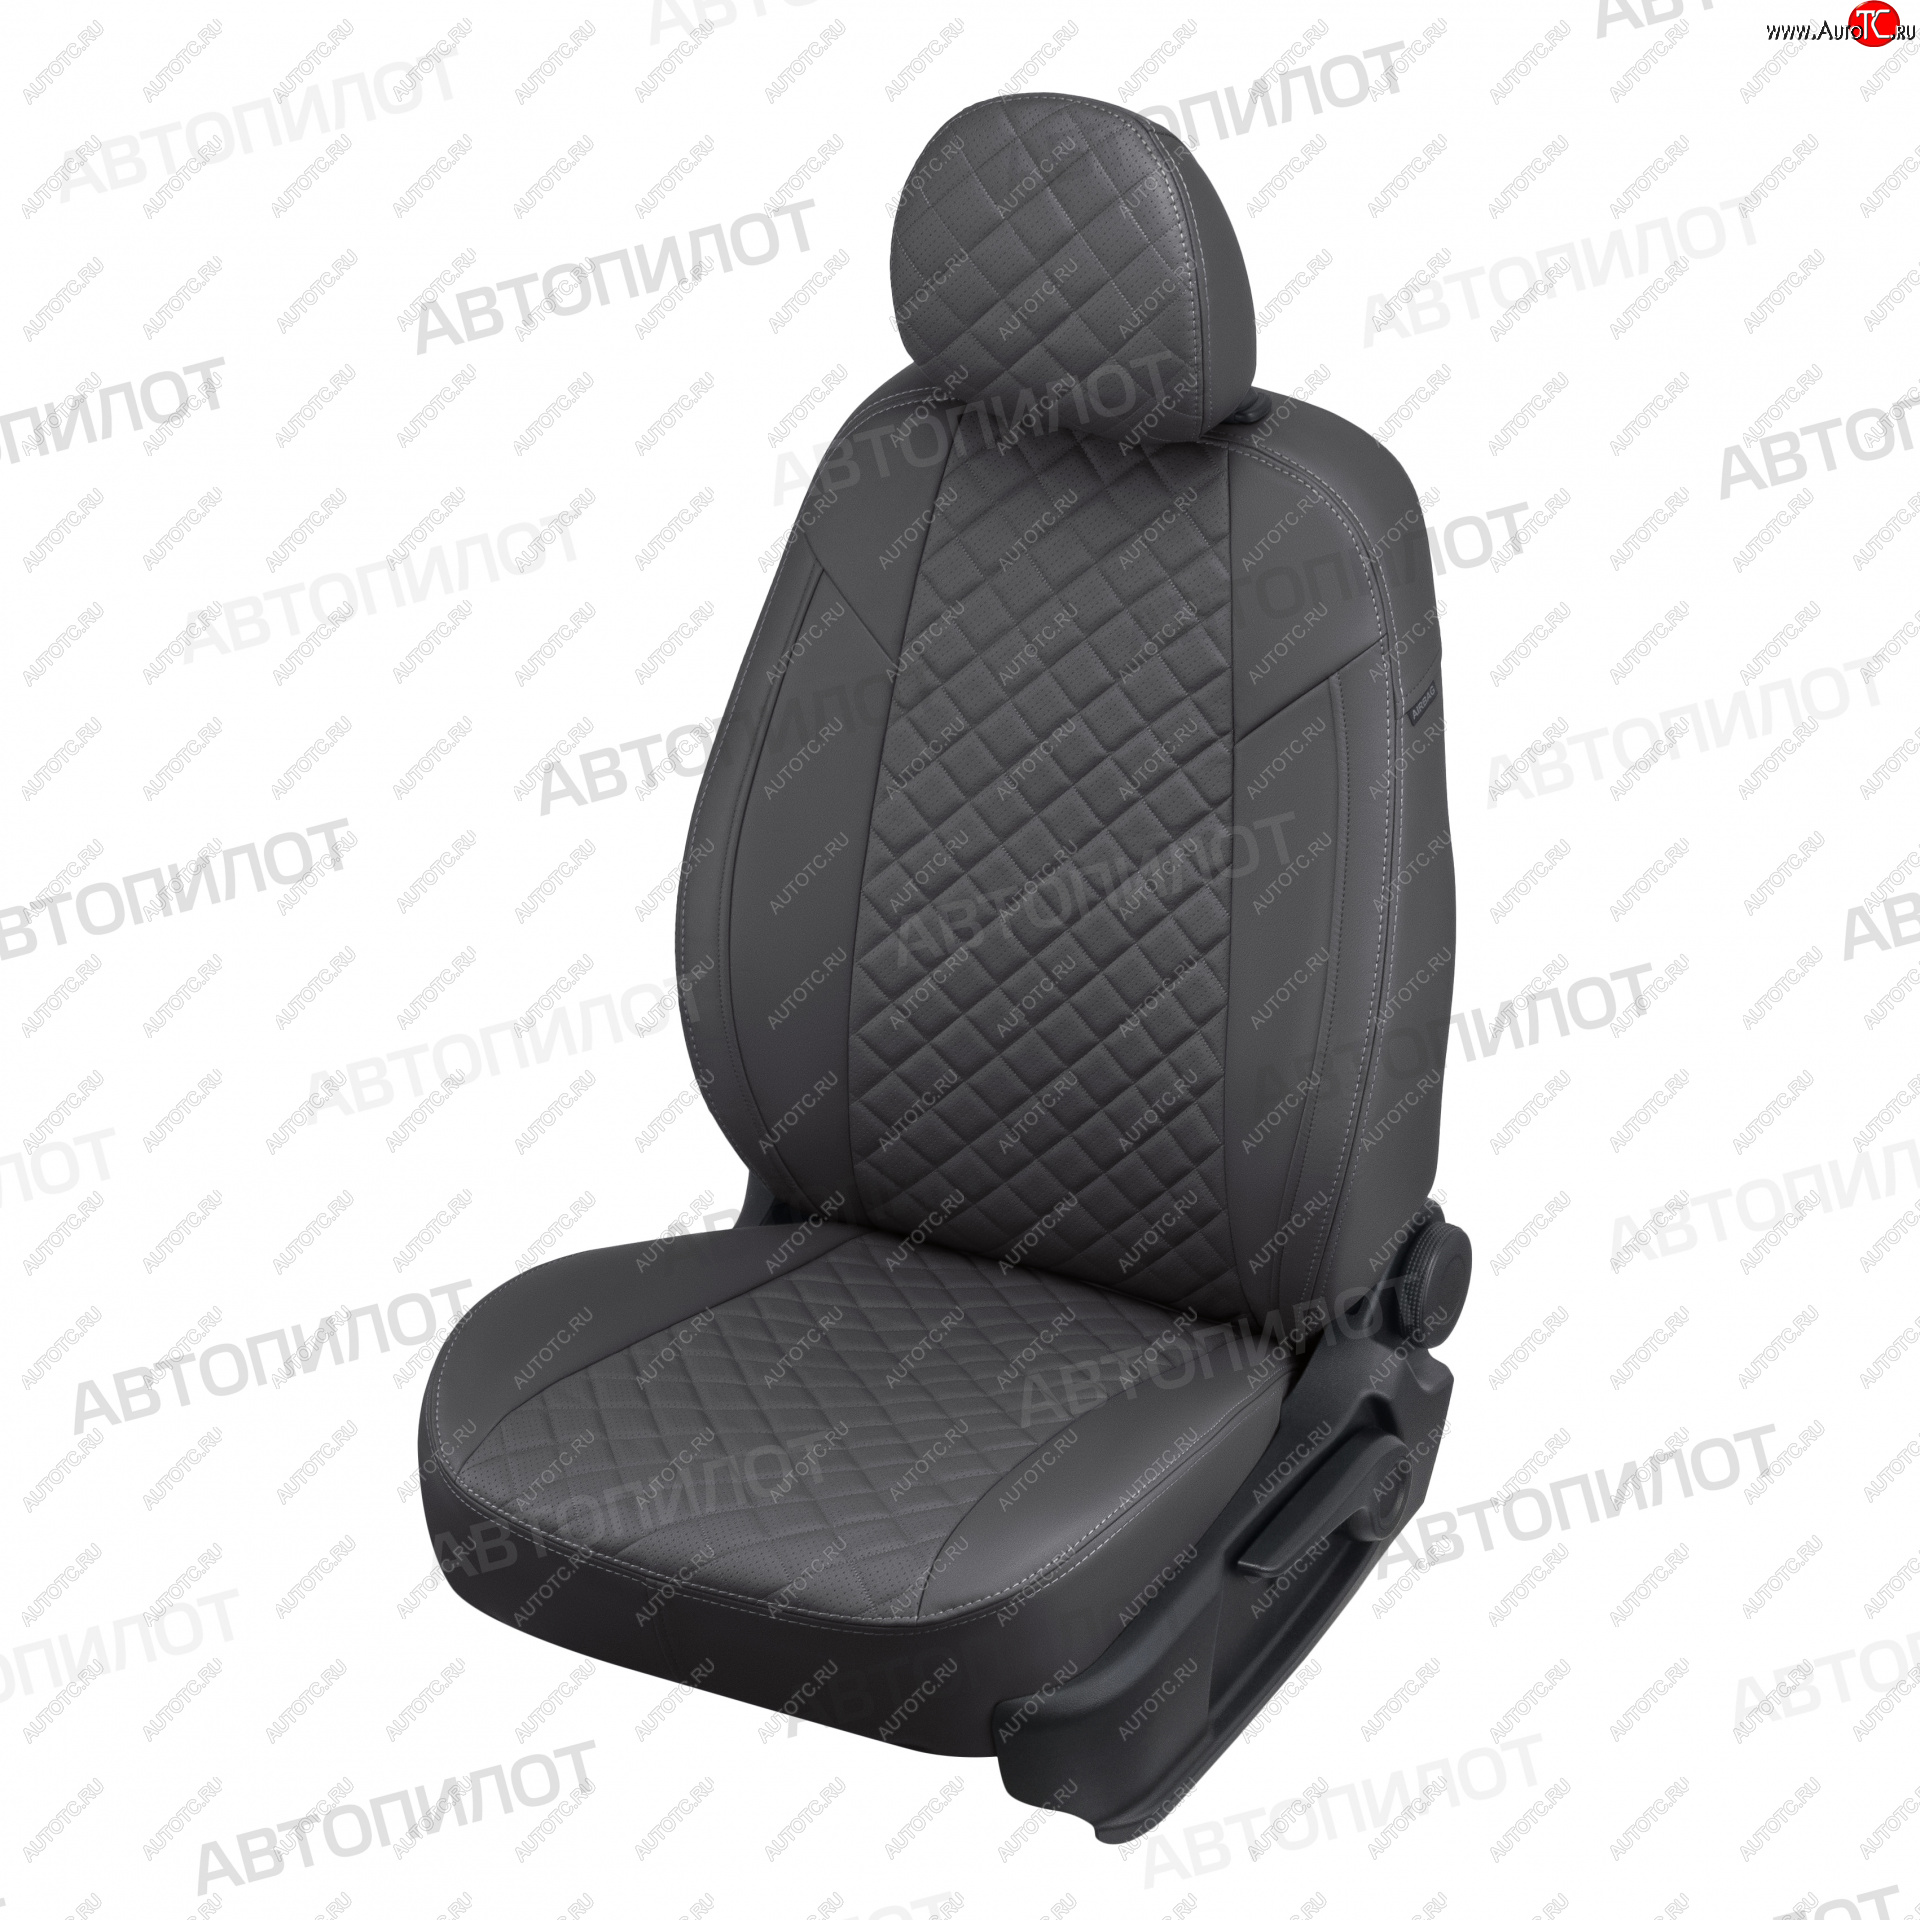 14 499 р. Чехлы сидений (Trend, экокожа) Автопилот Ромб  Ford Kuga  1 (2008-2013) (темно-серый)